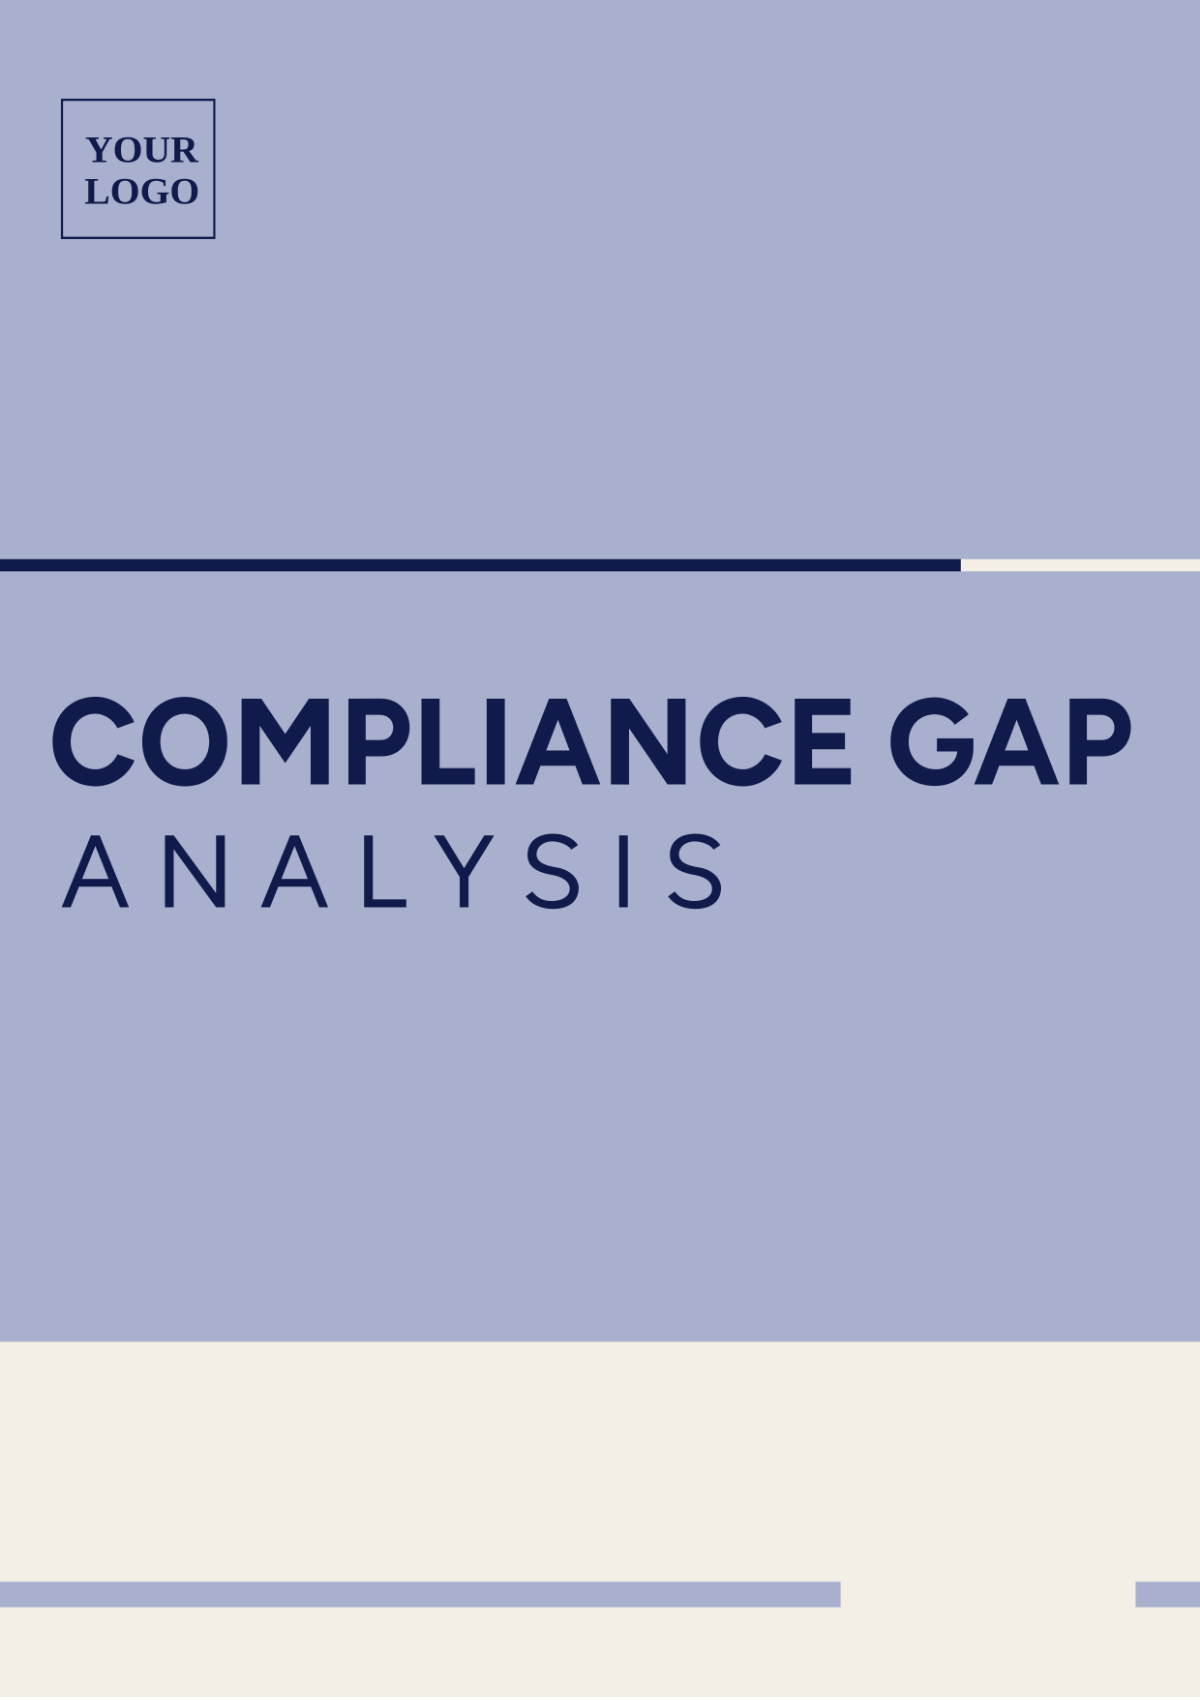 Free Compliance Gap Analysis Template